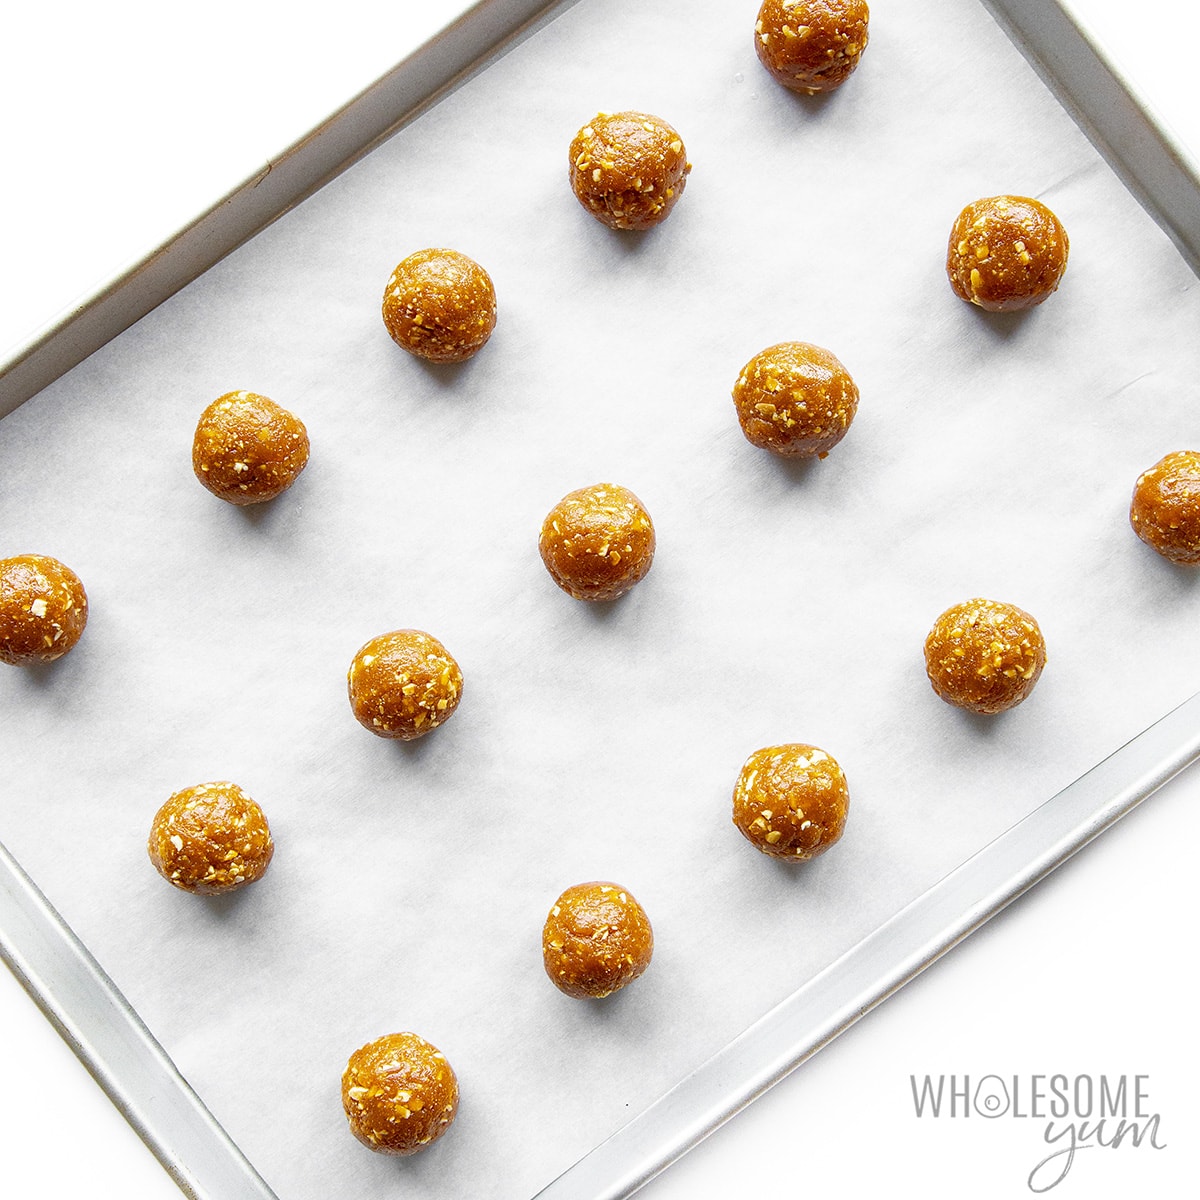 Balls of cookie dough on a prepared baking sheet.